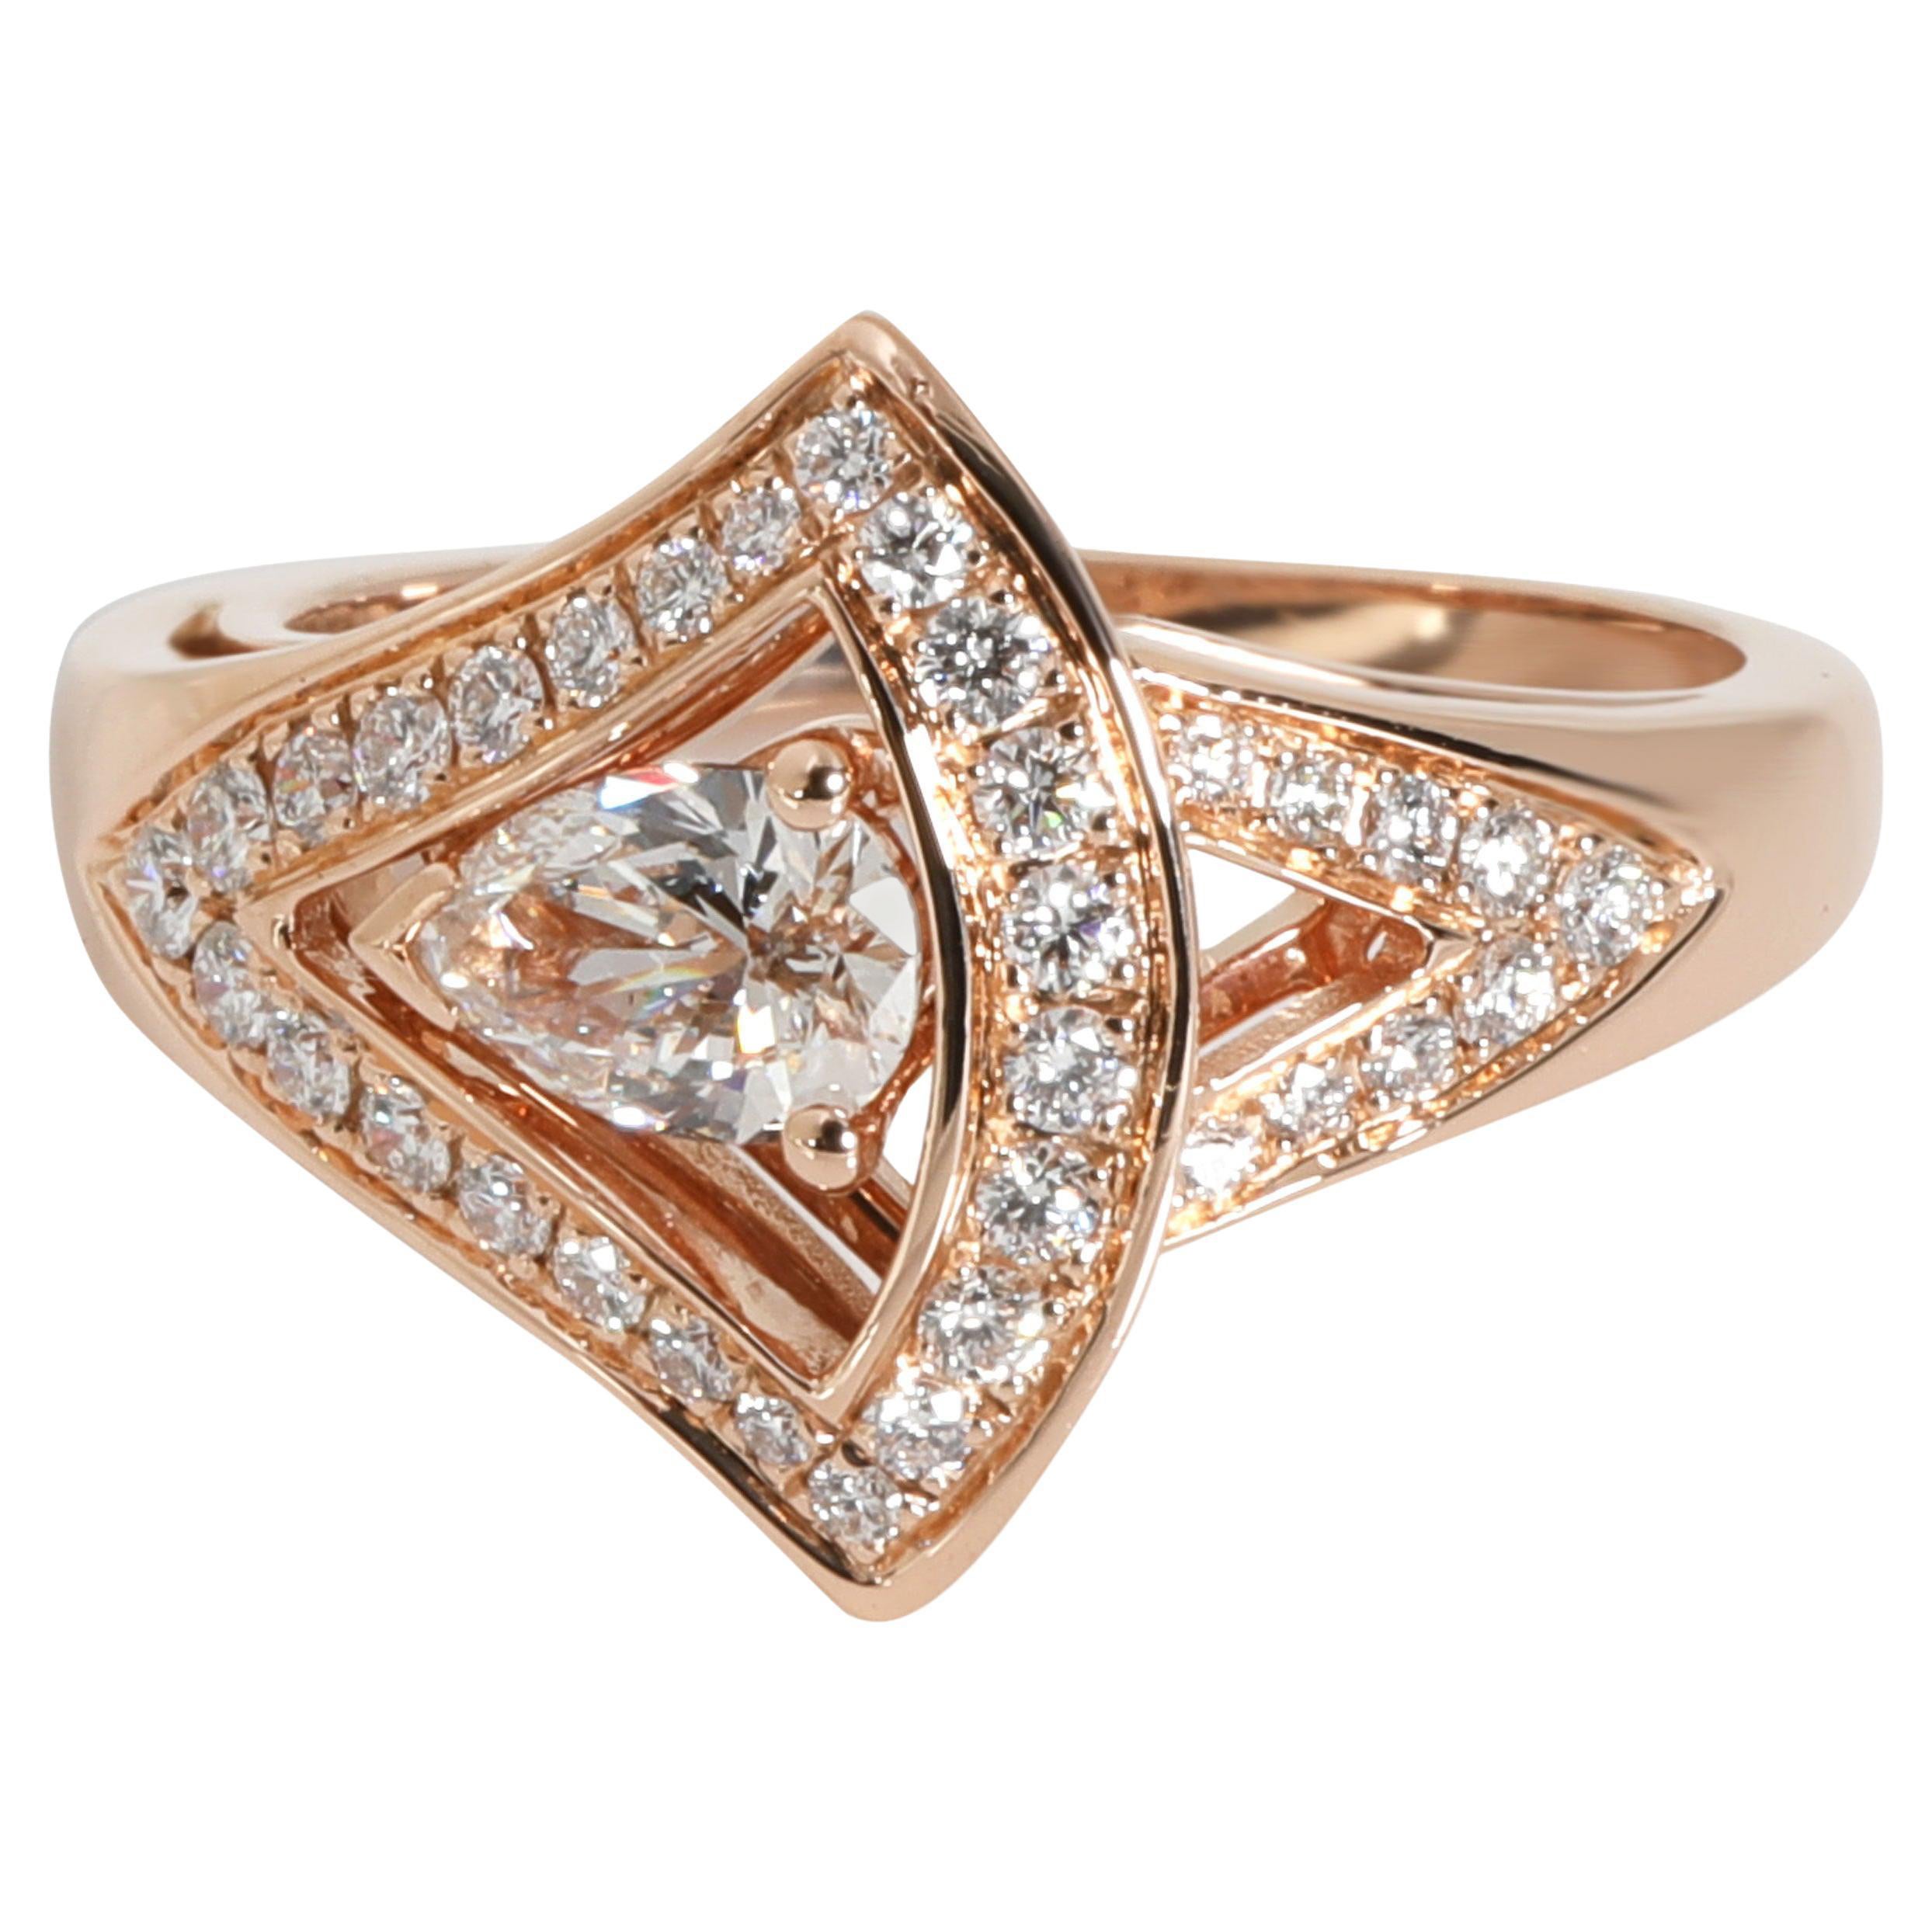 Bulgari Diva's Dream Diamond Ring in 18k Rose Gold 0.67 CTW